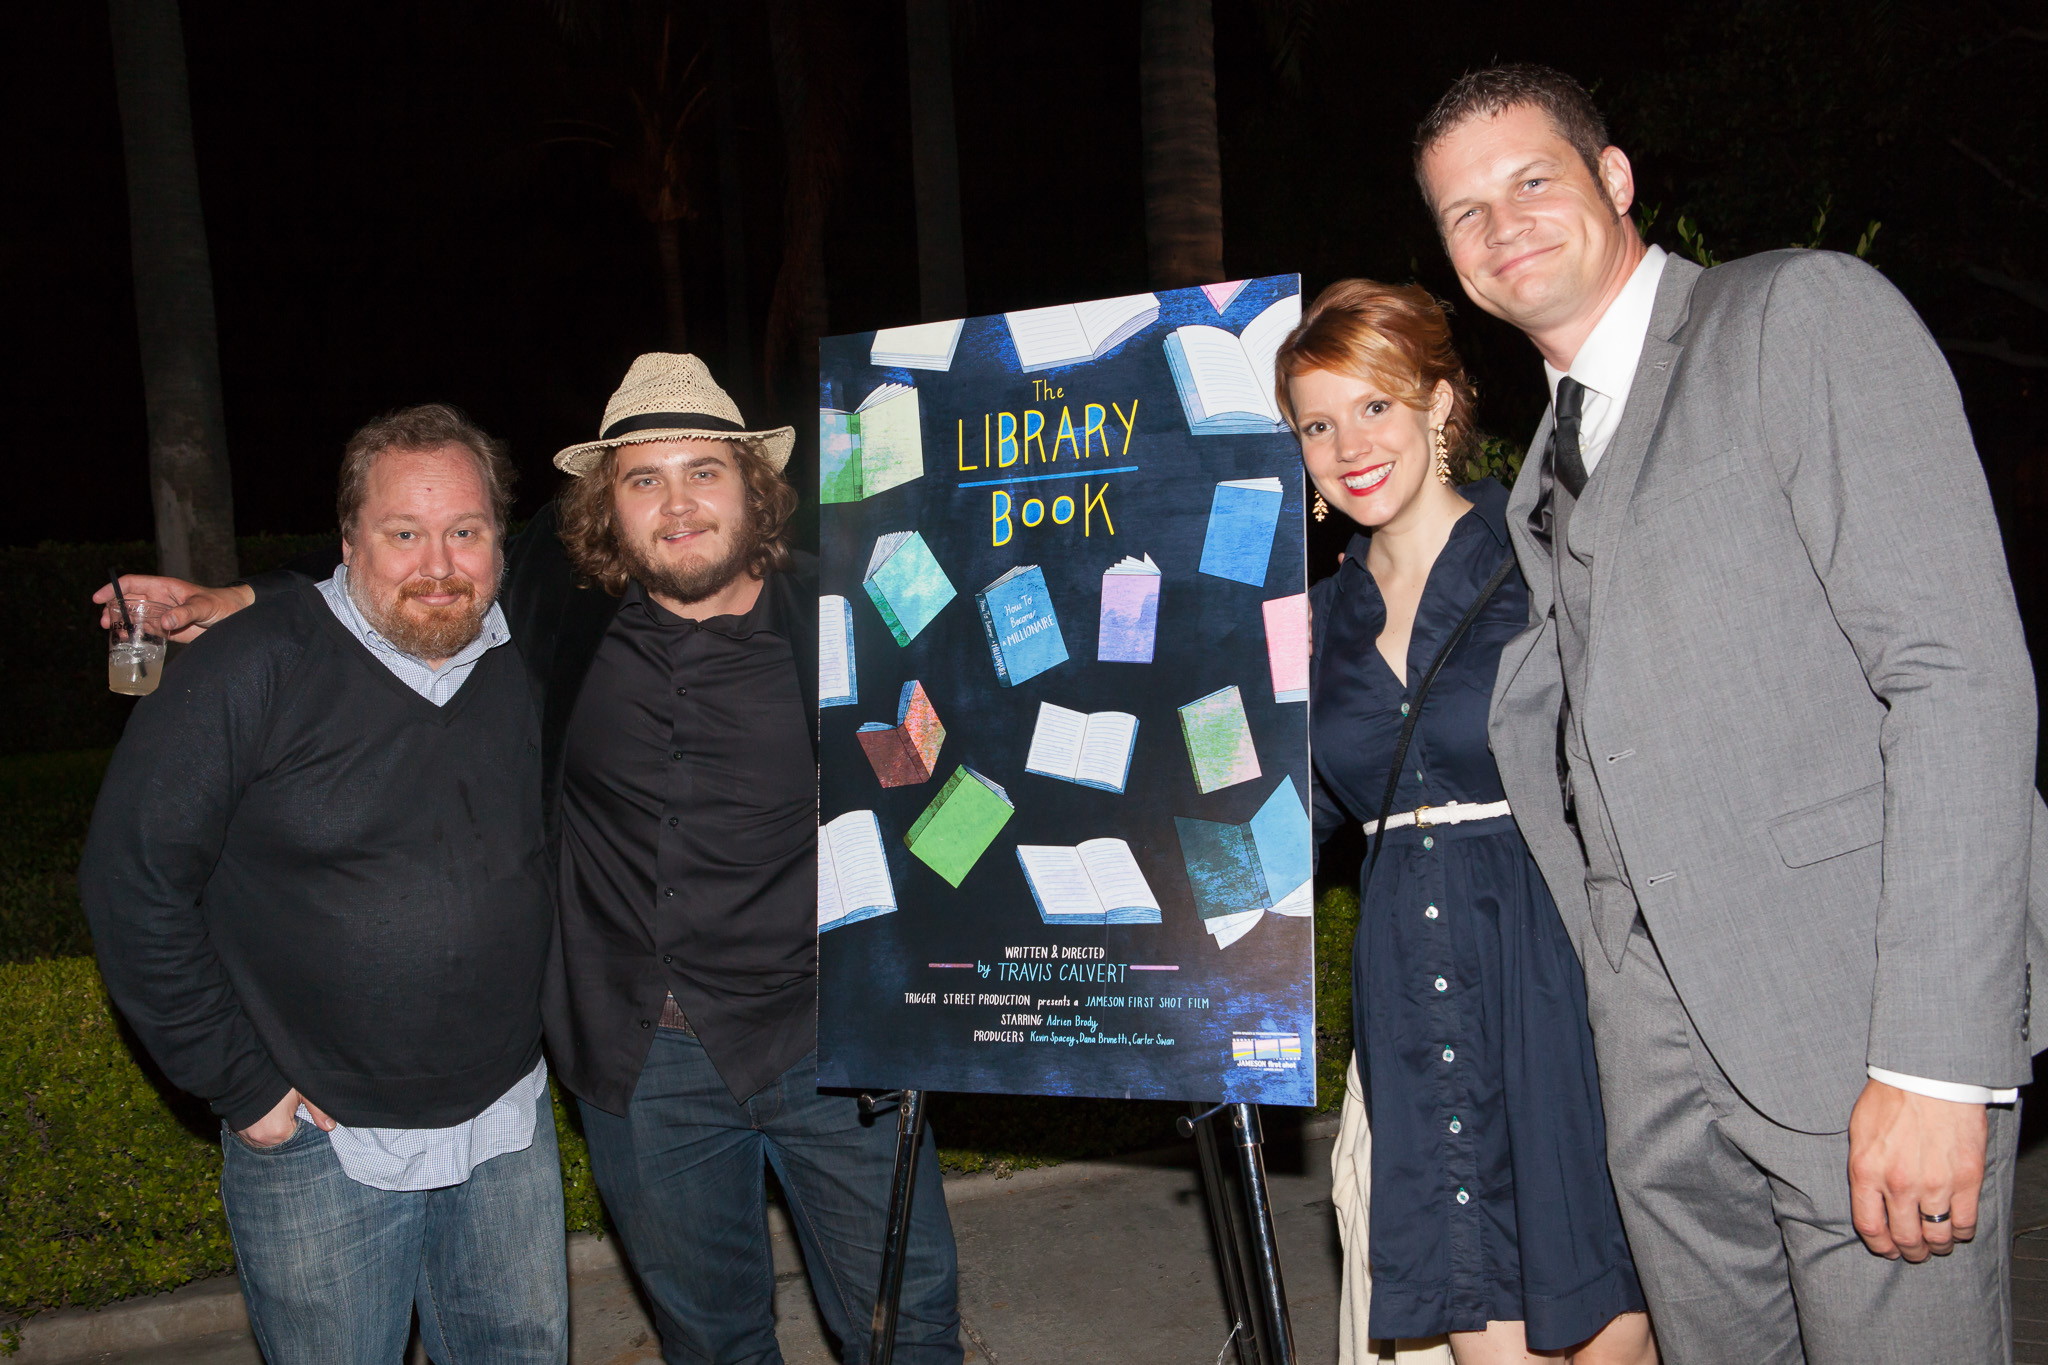 David Koth, Bjorn Alexander, Nina Rausch and Travis Calvert at the Jameson First Shot Premiere at Paramount Pictures